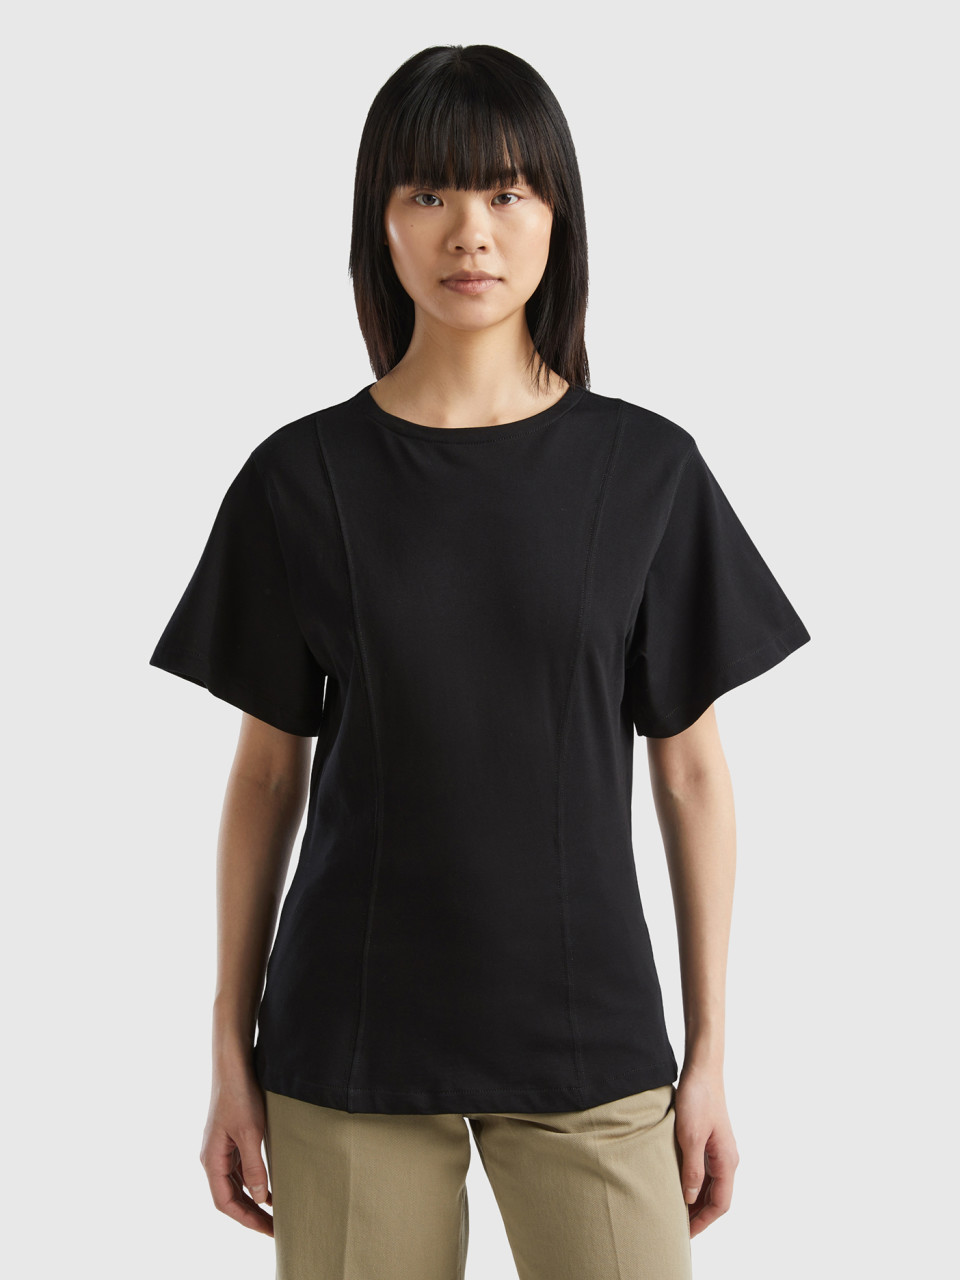 Benetton, Warm Fitted T-shirt, Black, Women